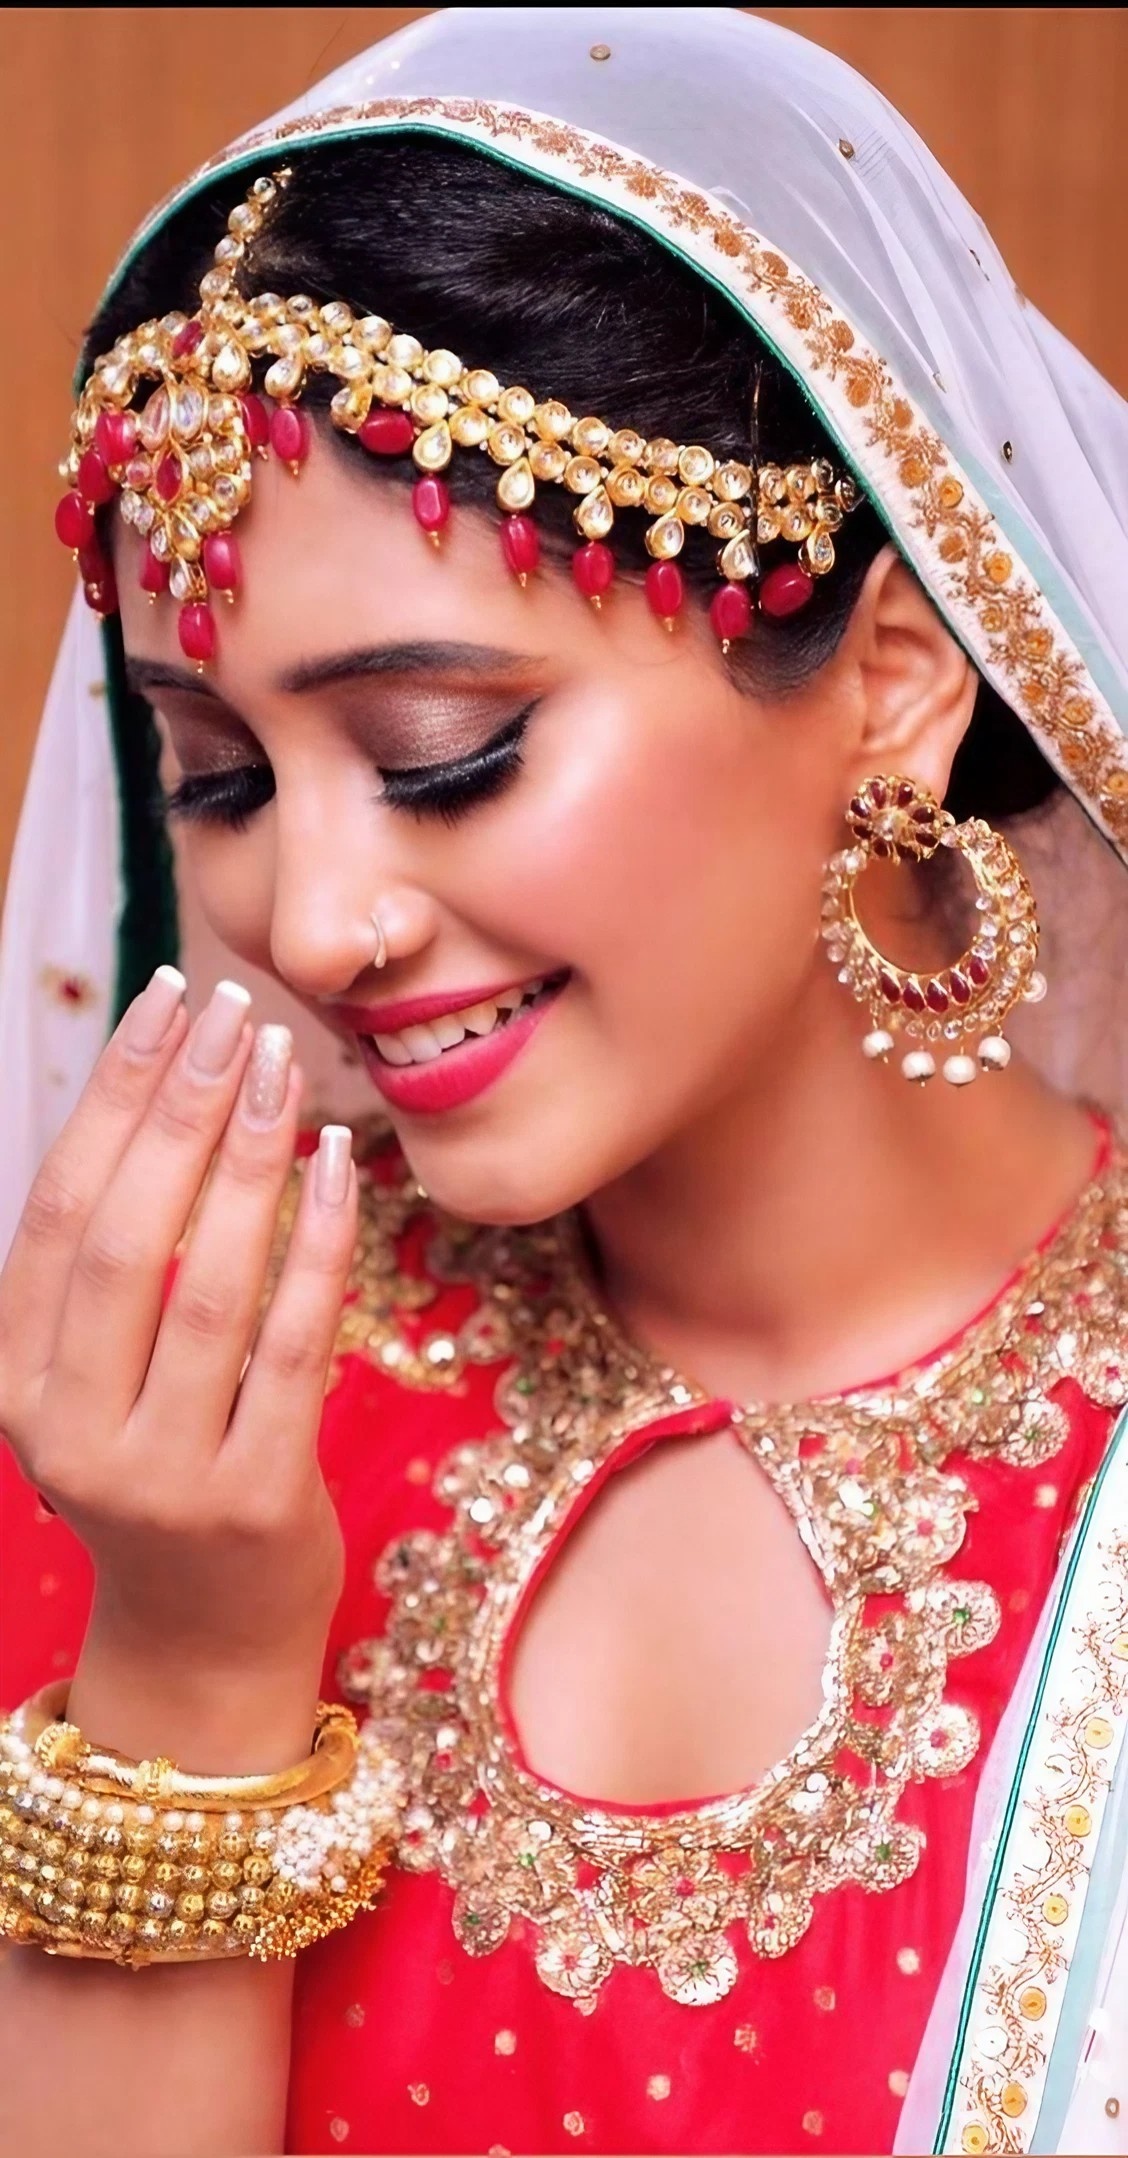 Shivangi Joshi Ka - Shivangi Joshi in traditional look